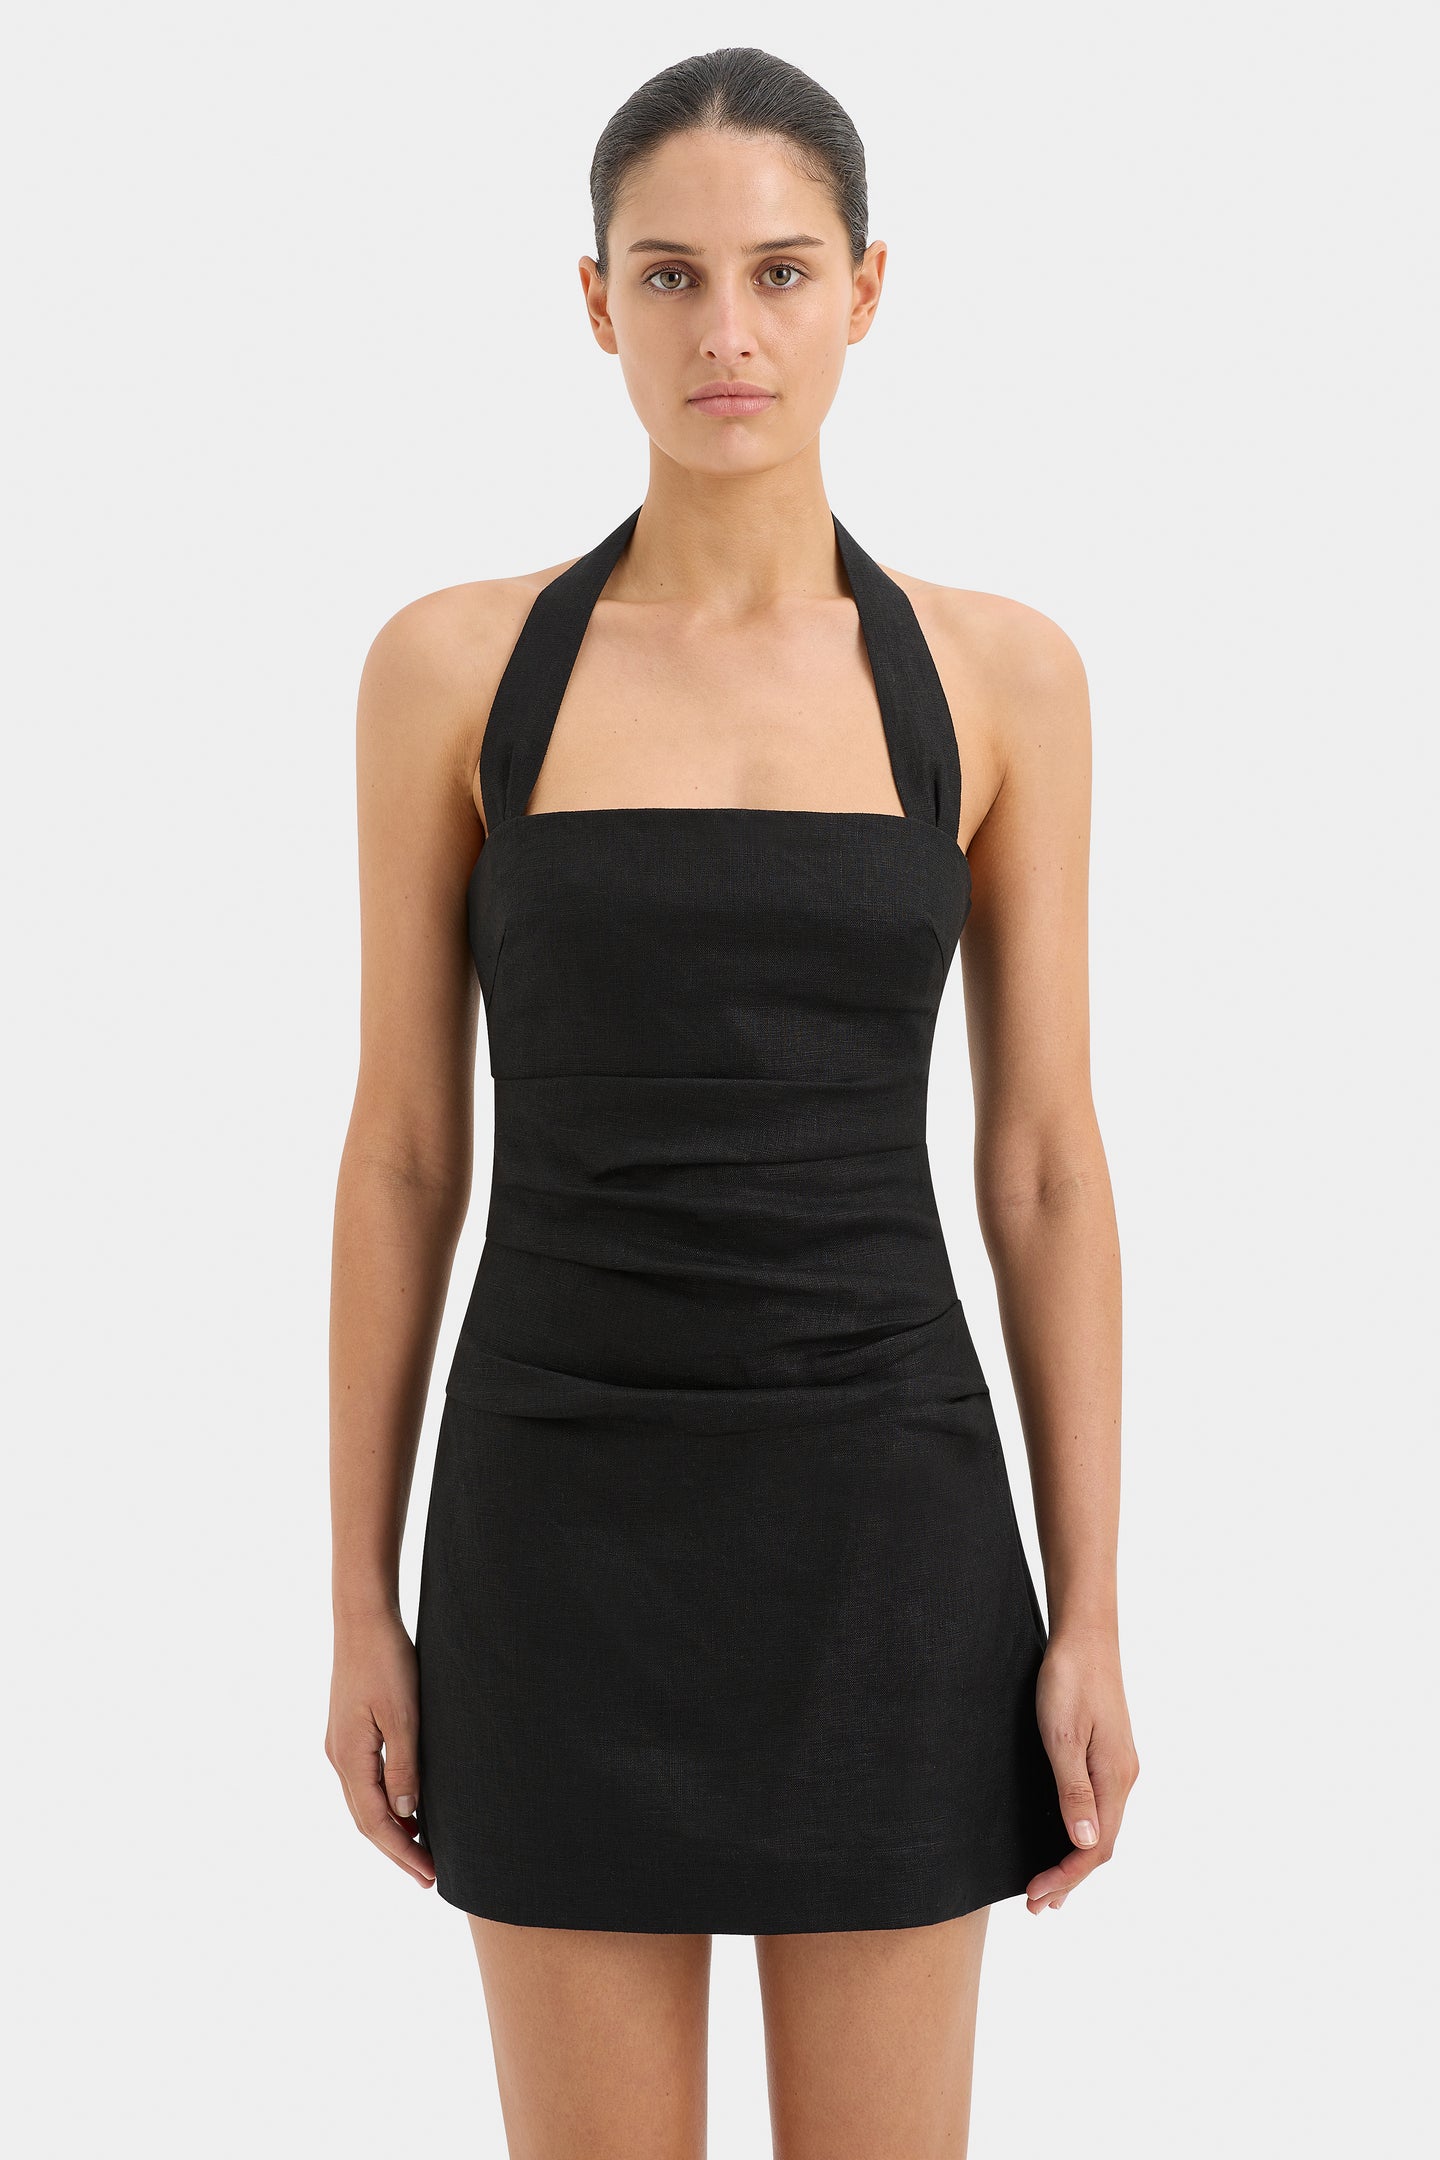 Maitland Halter Mini Dress Black